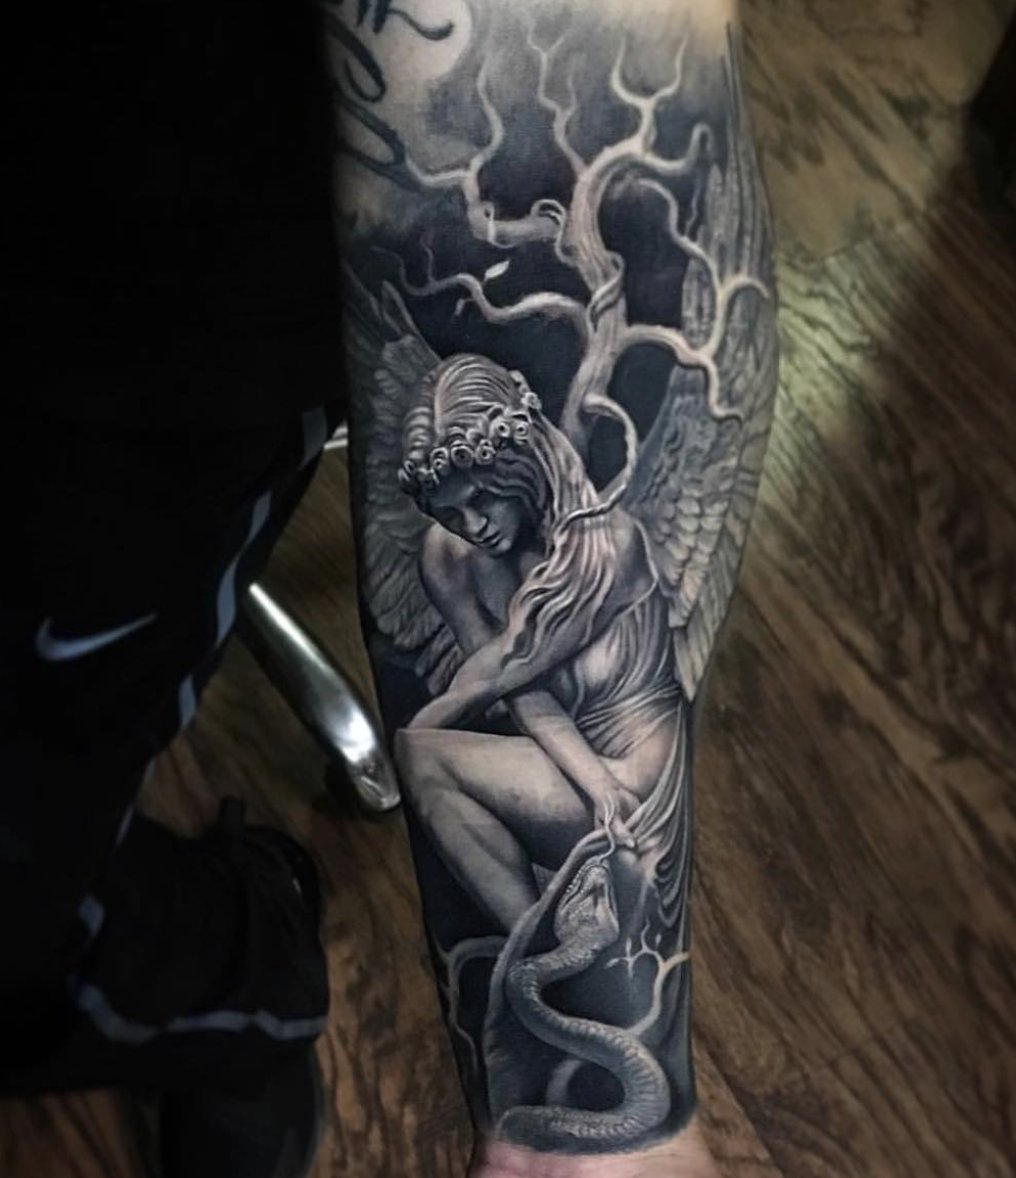 Dark Age Tattoo on X: Gorgeous tattoo by Rember Orellana at Dark Age  Tattoo Studio in Denton Texas #realism #tattoo #blackandgreyrealism  #realistictattoo #dentontattoo #dallastattoo #dfwtattoo #tattooartist  #detail #treetattoo #ladytattoo